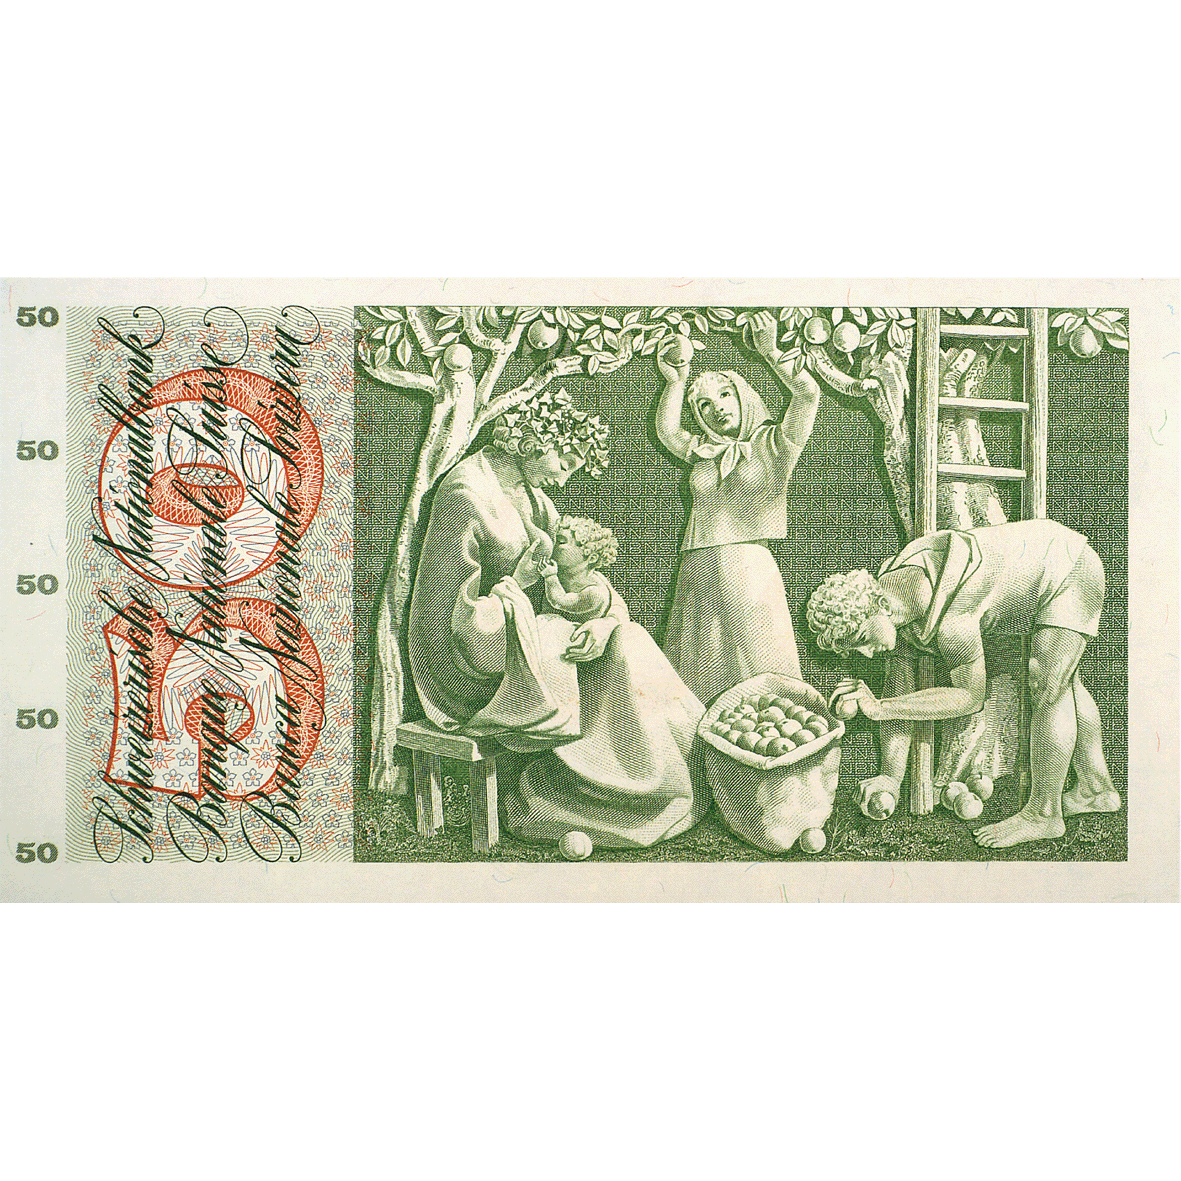 Schweizerische Eidgenossenschaft, 50 Franken (5. Banknotenserie, in Kurs 1956-1980) (reverse)